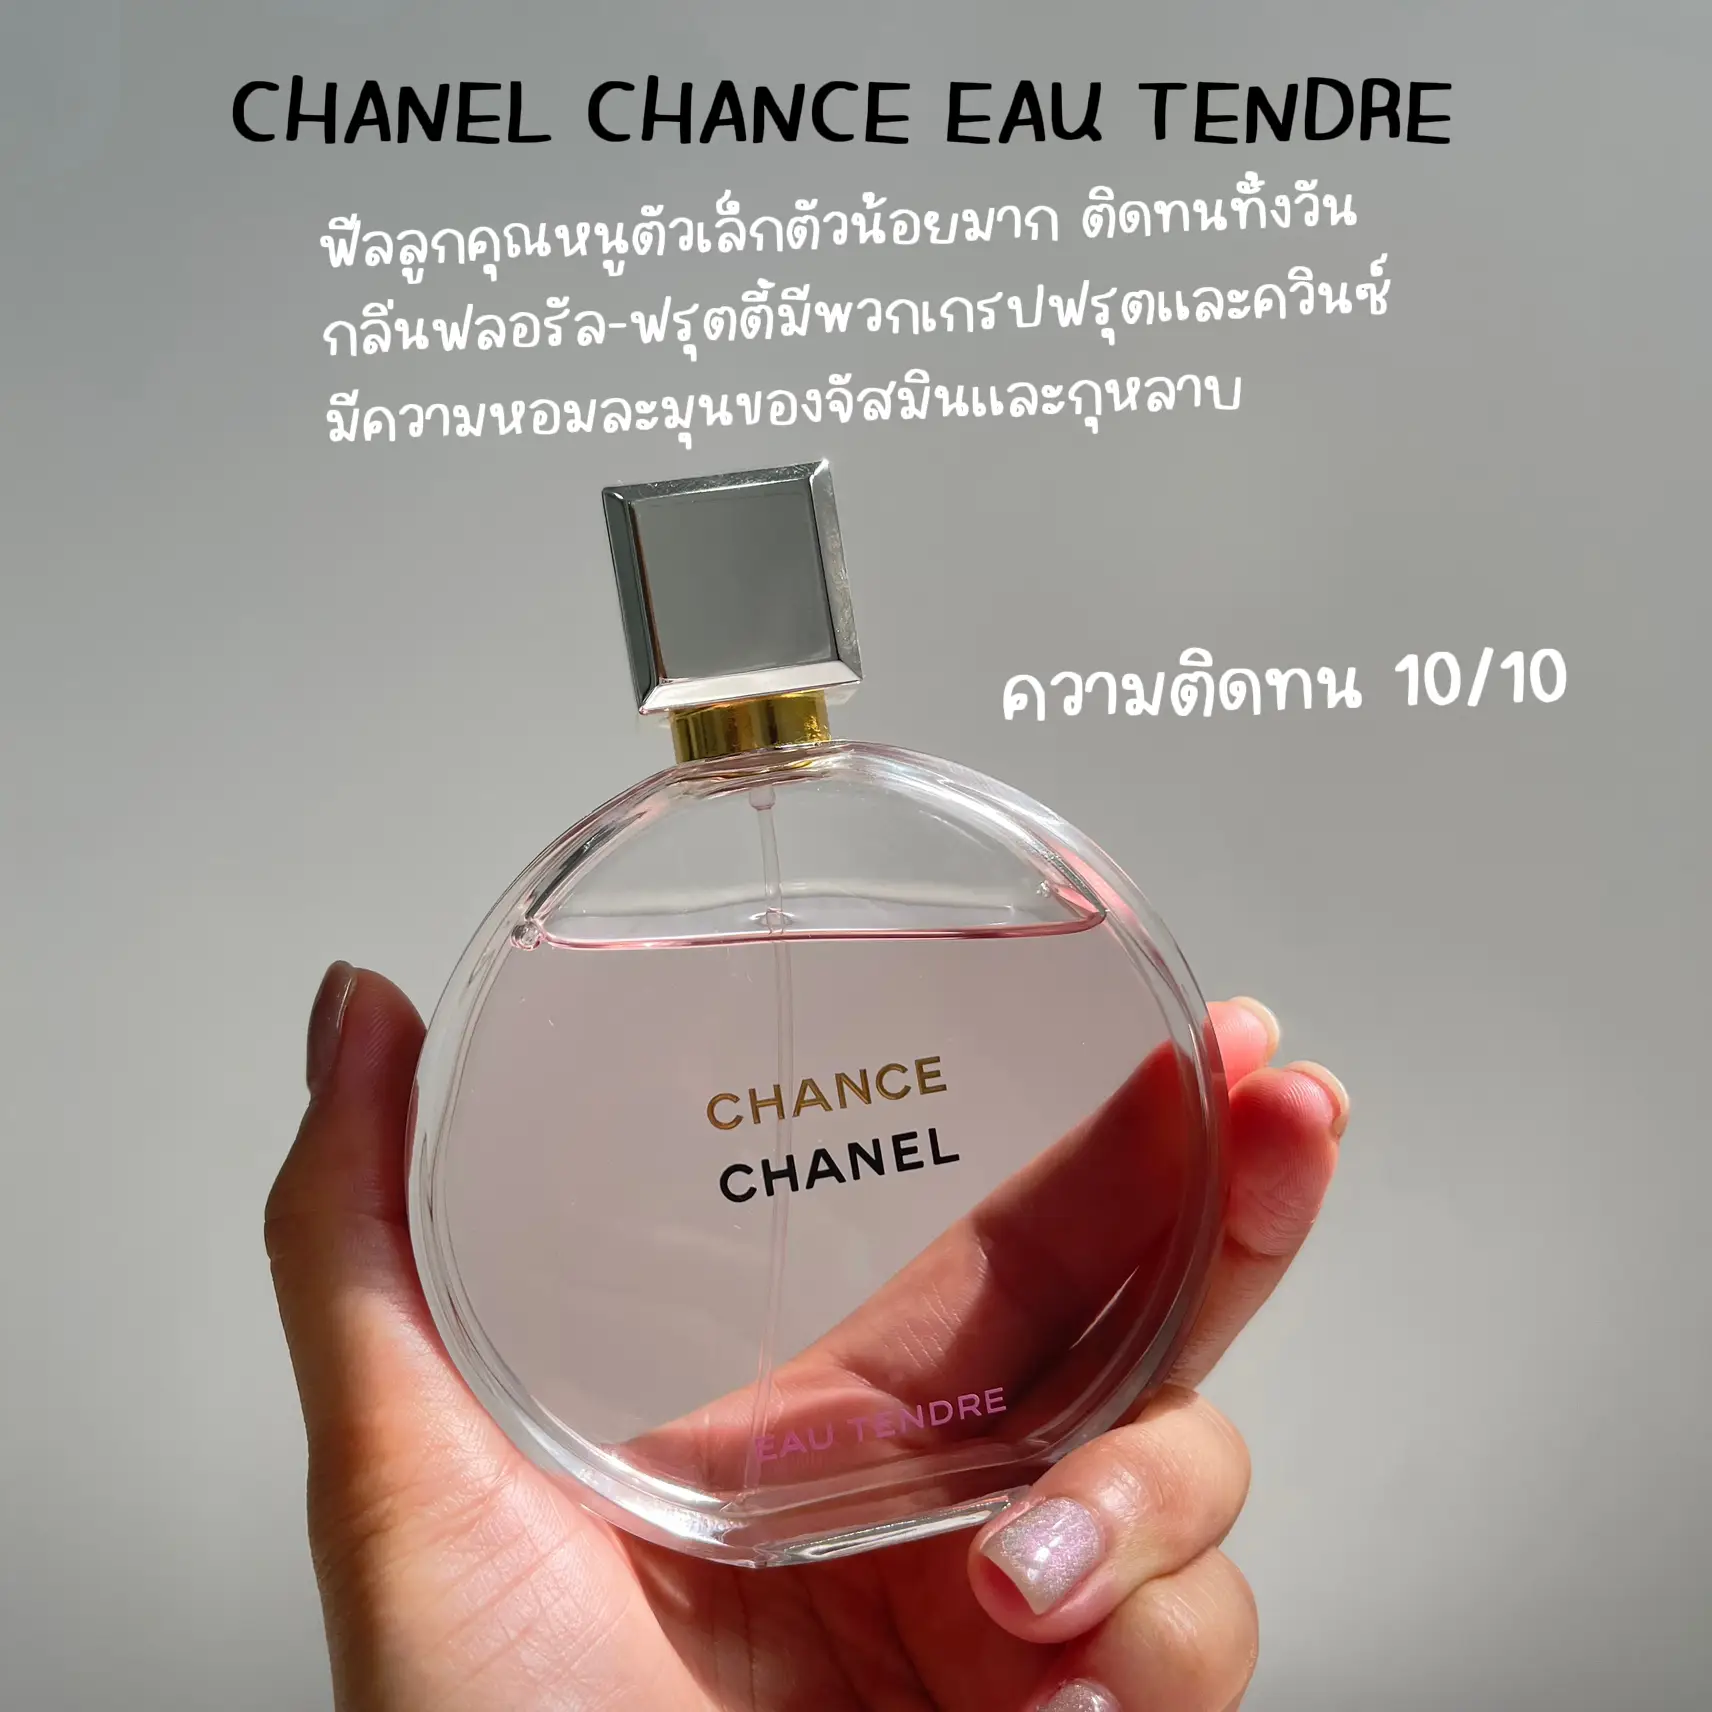 Chance Chanel Eaue Tendré 5 fl oz for Sale in El Cajon, CA - OfferUp